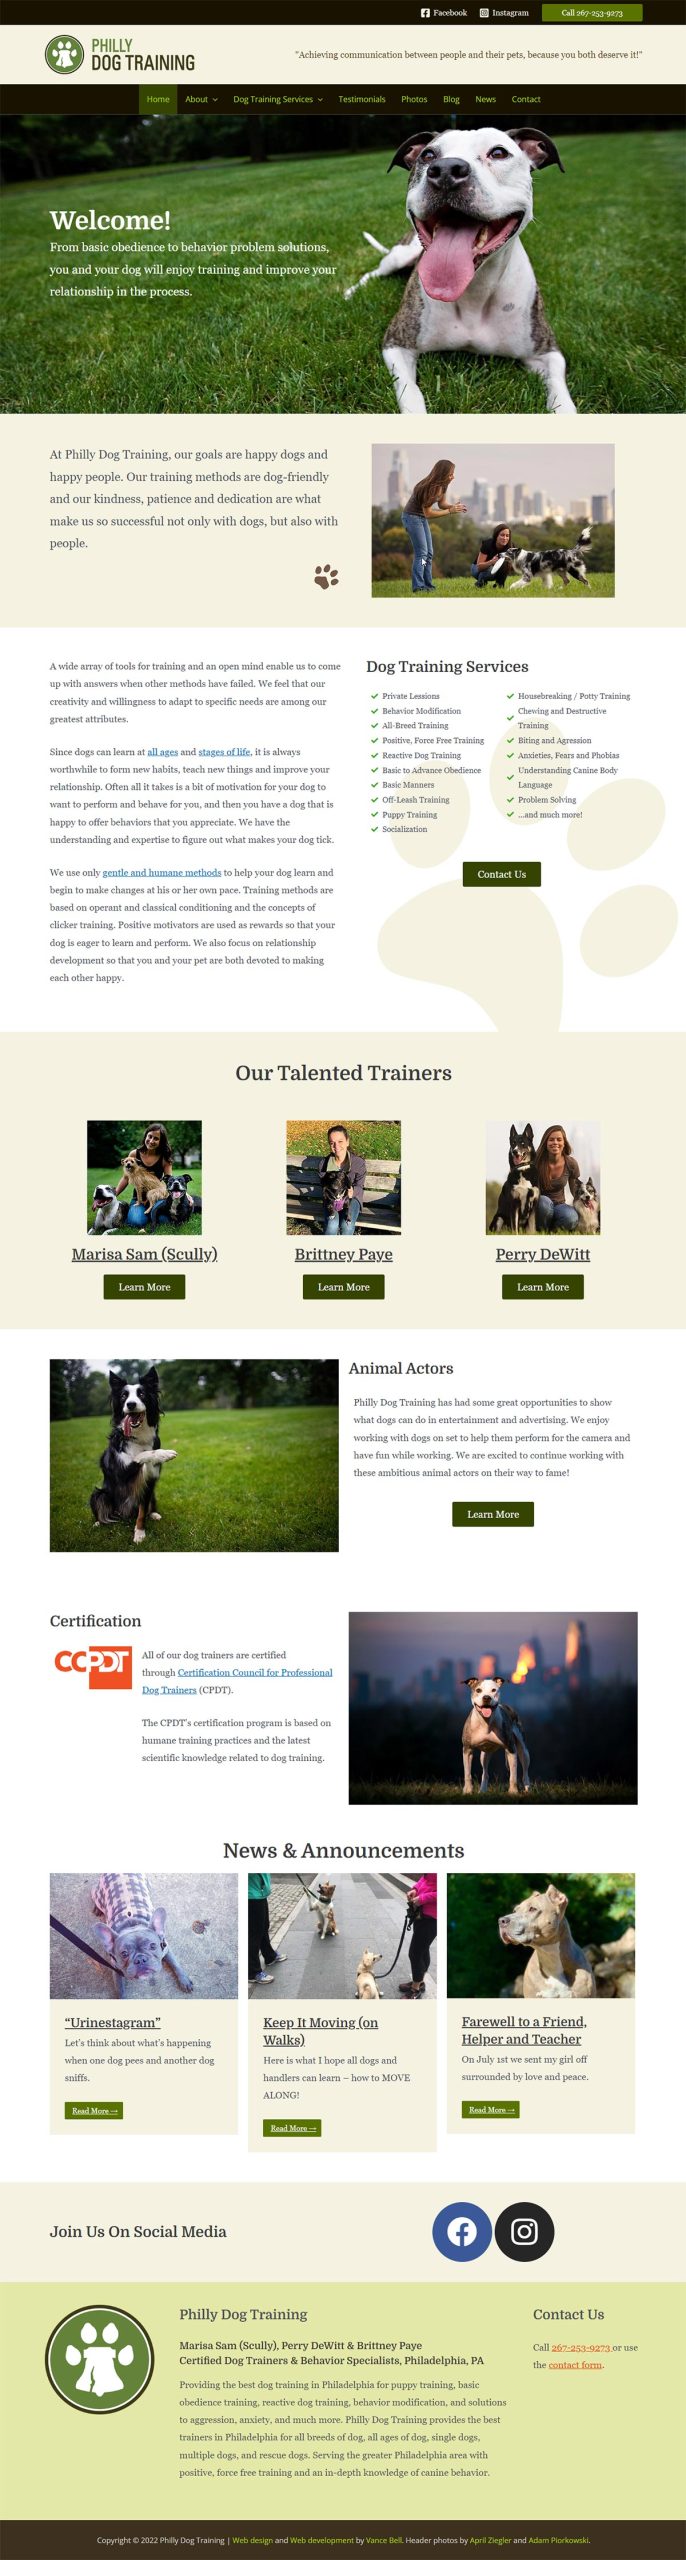 Web Design Portfolio - Philly Dog Training Website Design